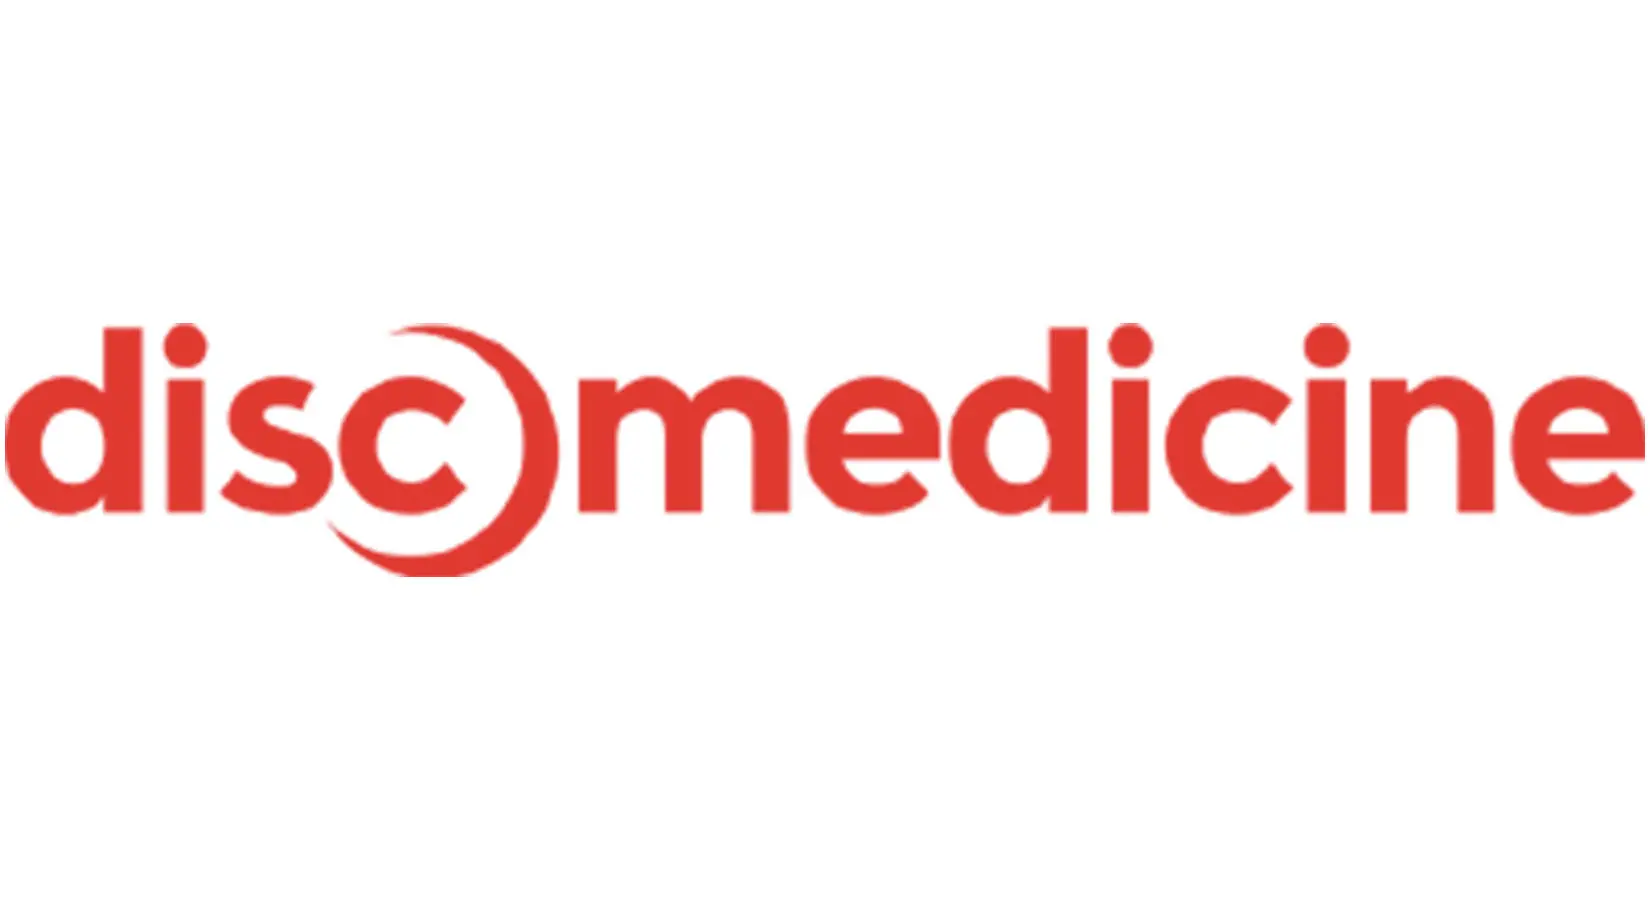 Disc Medicine Logo